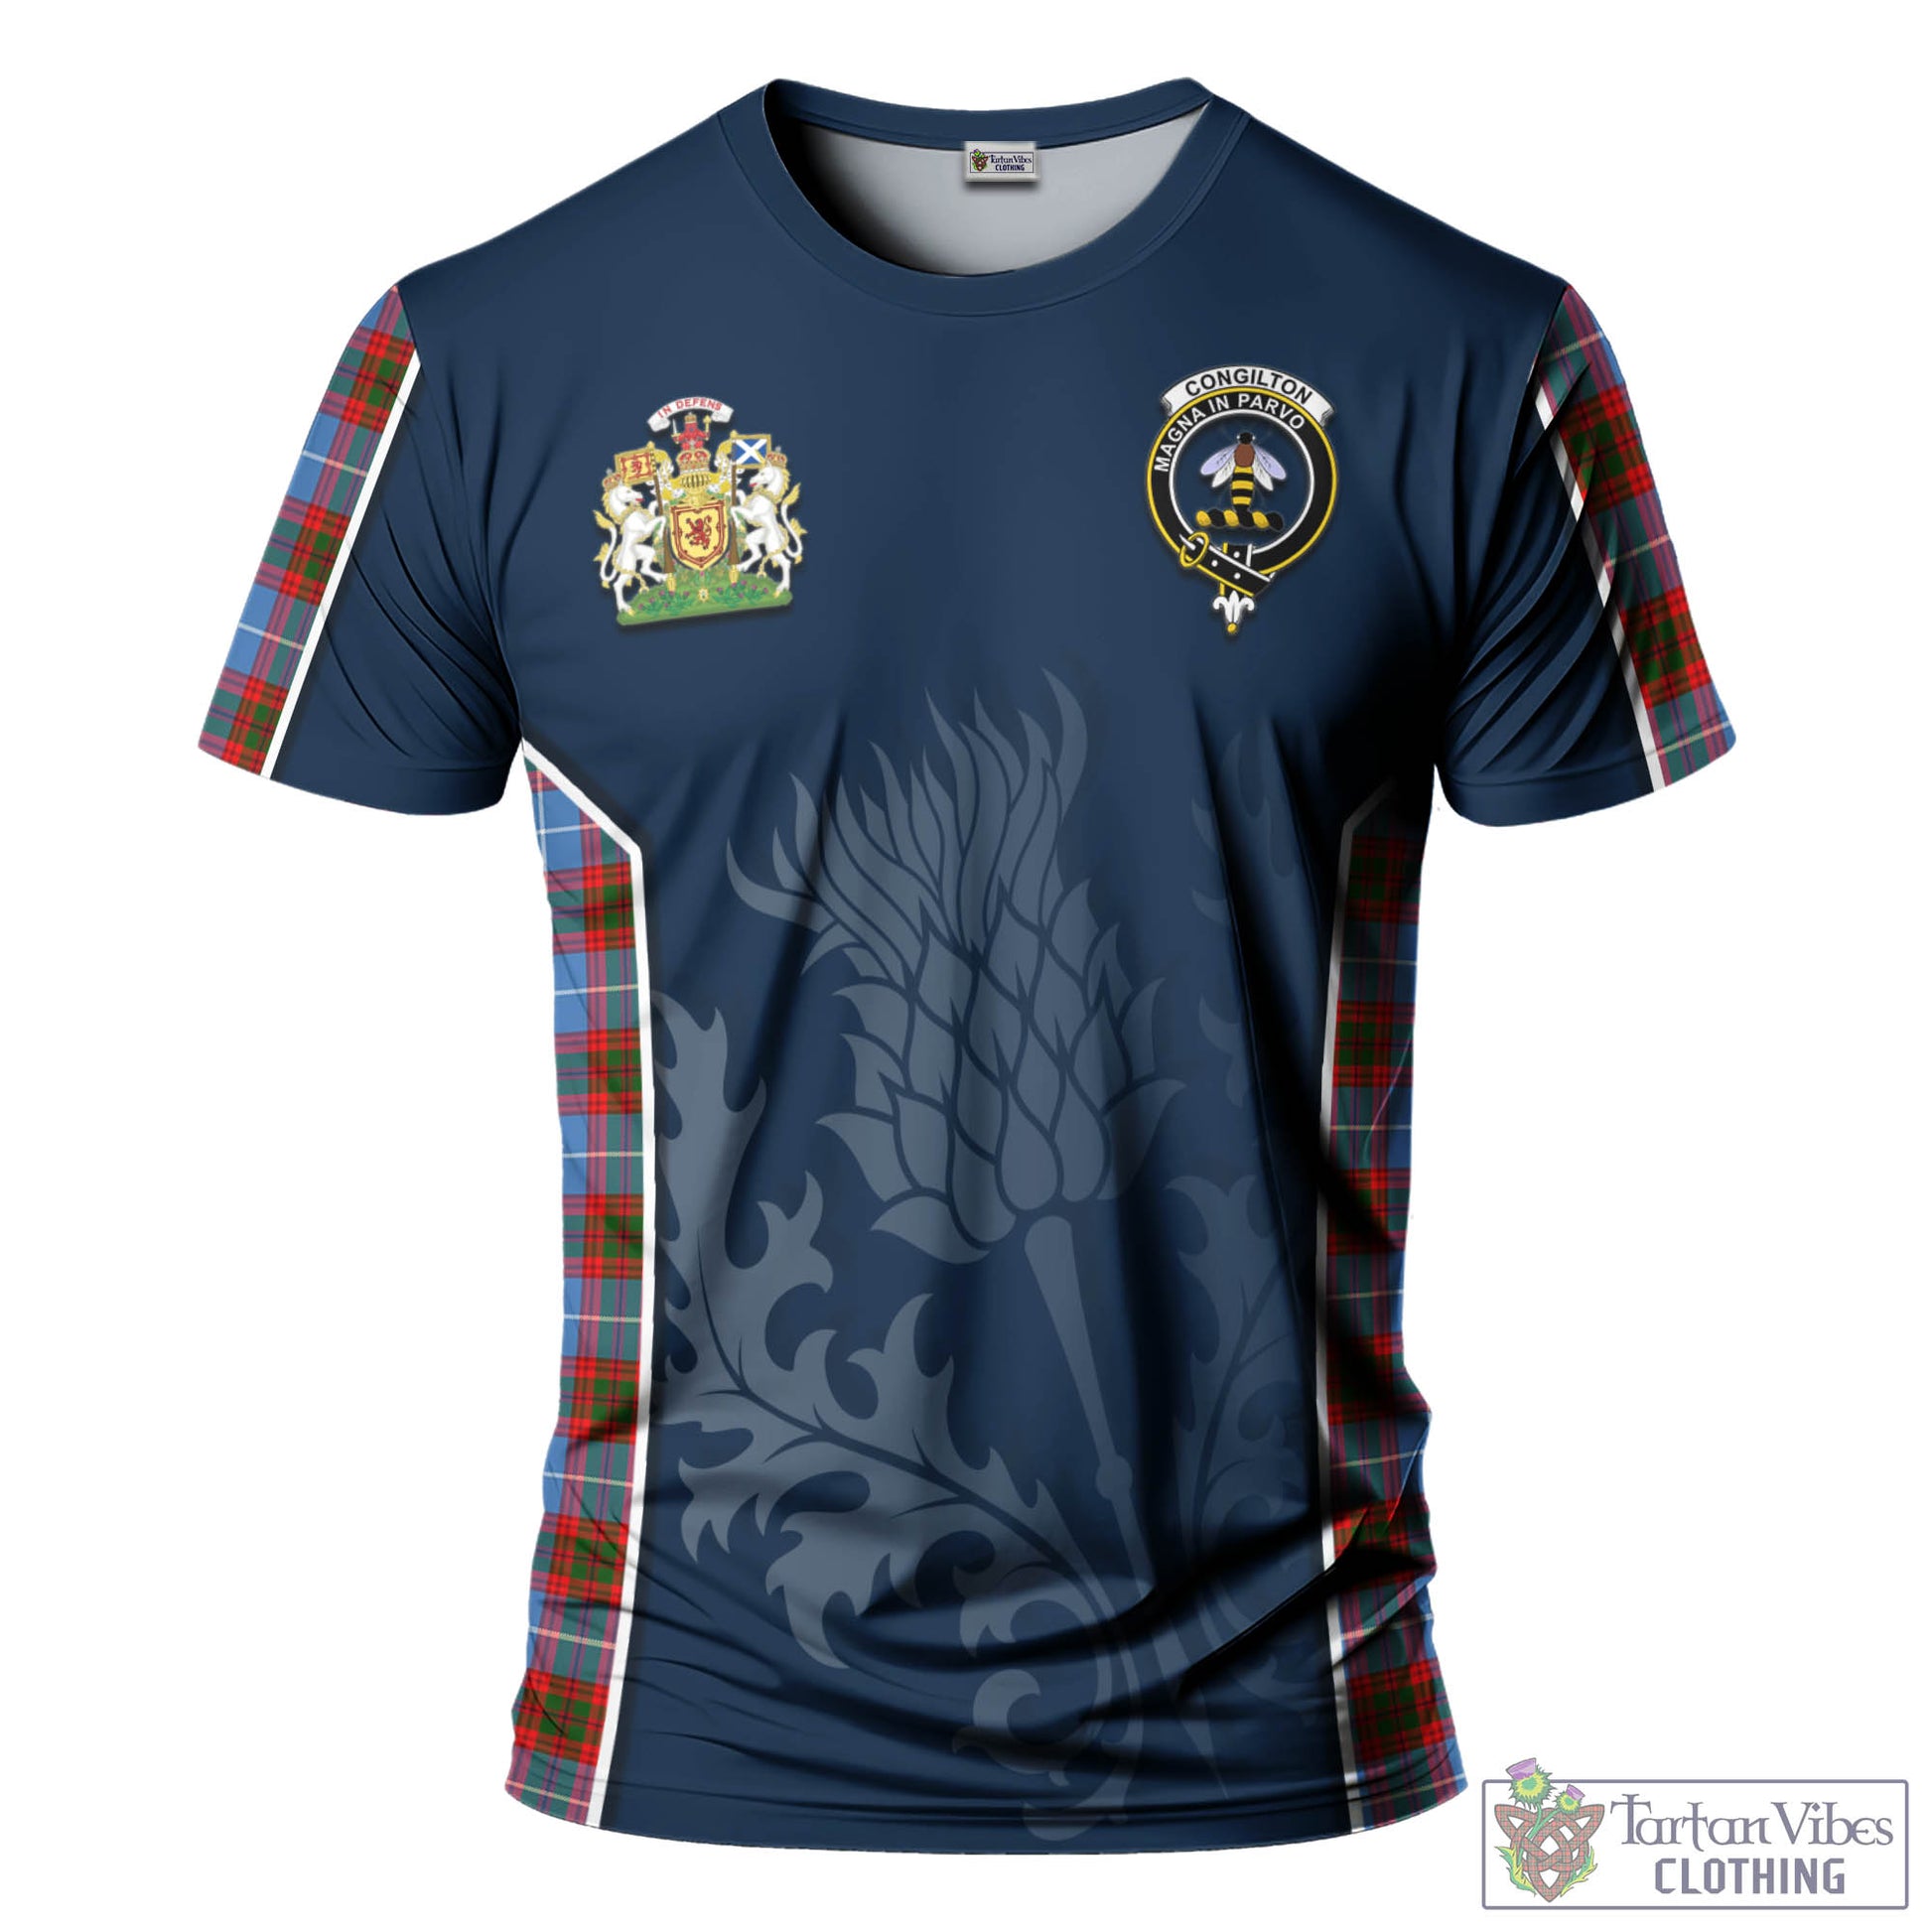 Tartan Vibes Clothing Congilton Tartan T-Shirt with Family Crest and Scottish Thistle Vibes Sport Style